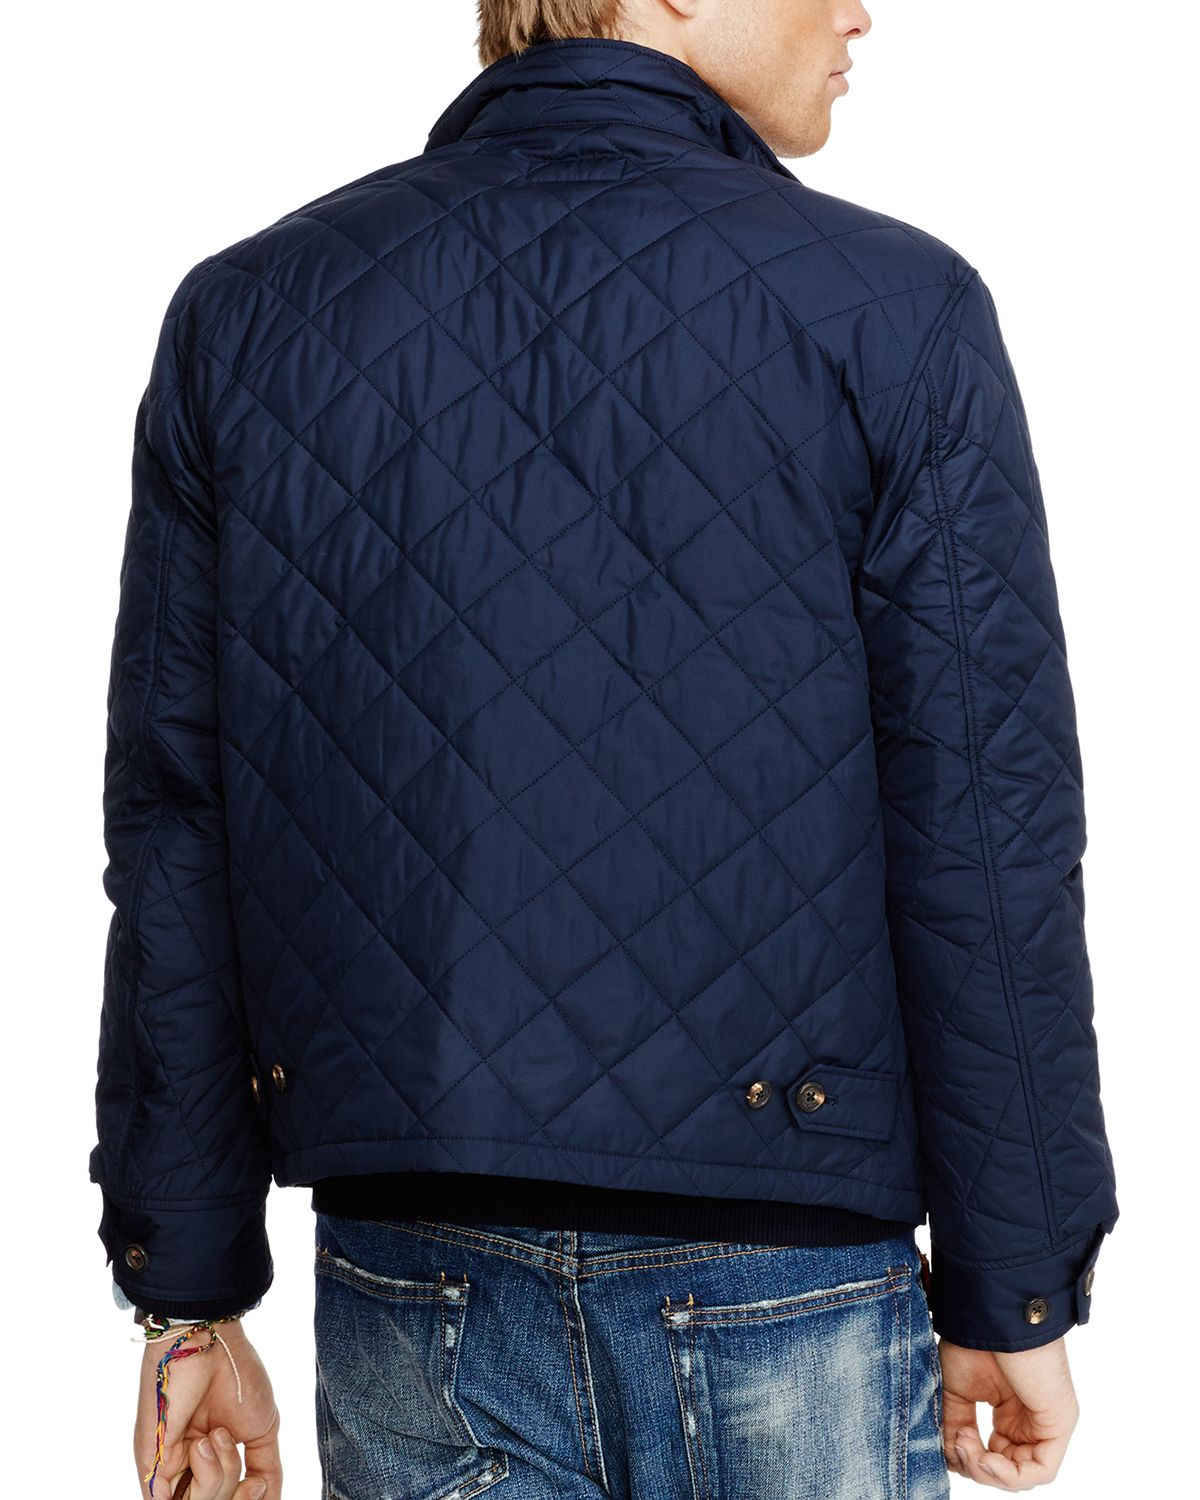 Ralph Lauren Quilted Barracuda Jacket Blue for Men - Lyst